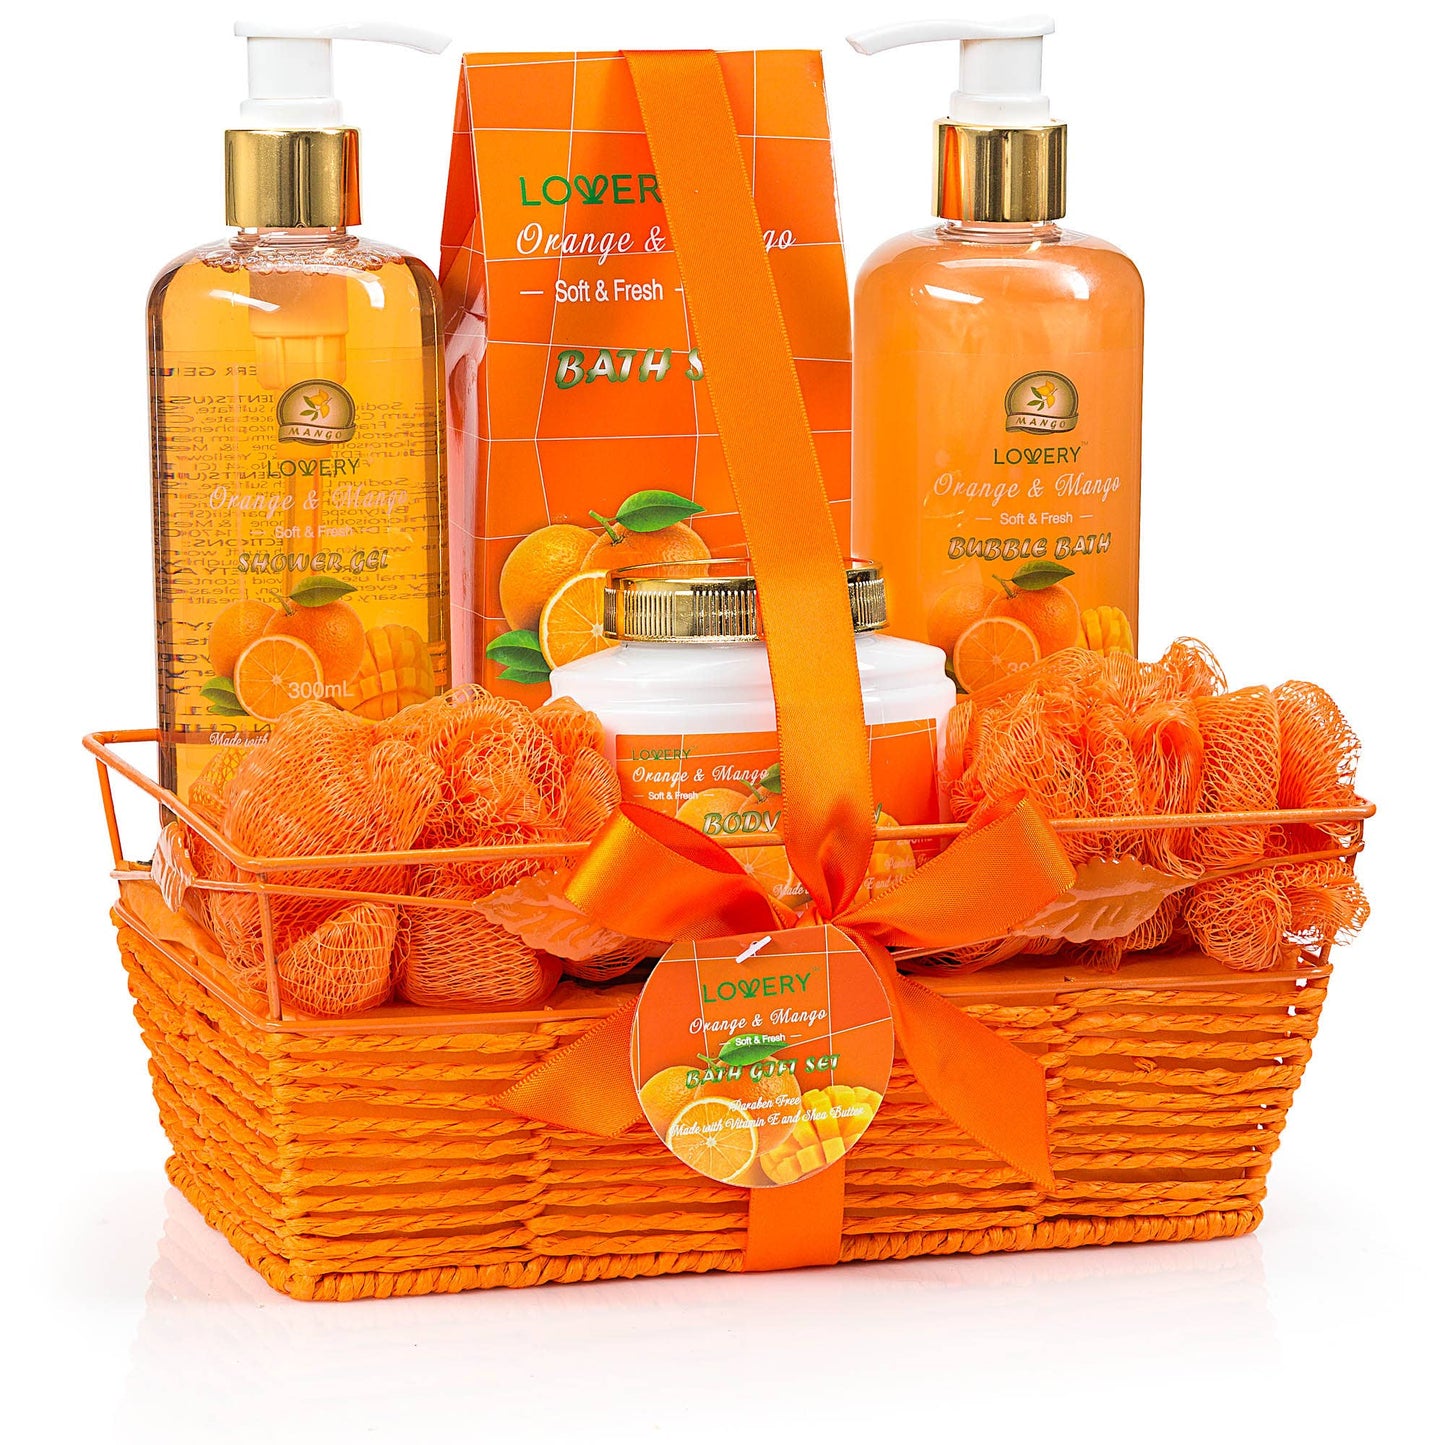 Home Spa Gift Basket in Orange Mango, Bath and Body Care Kit